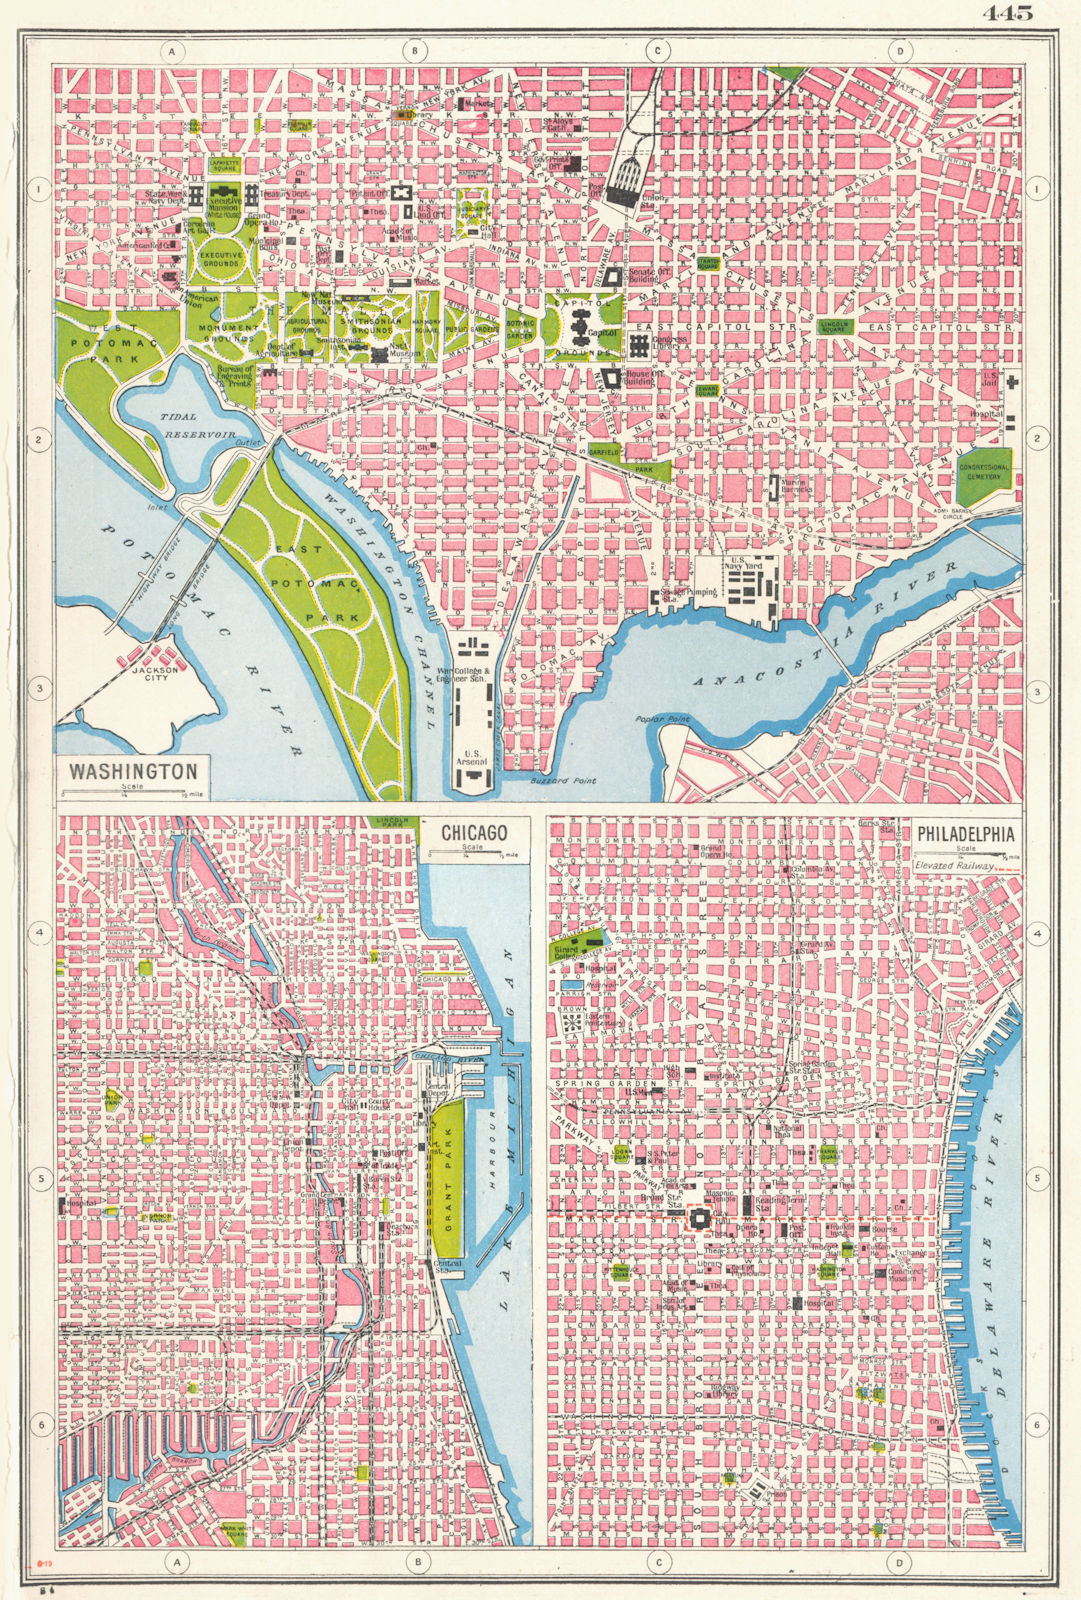 USA CITIES. Washington DC Chicago & Philadelphia city plans 1920 old map